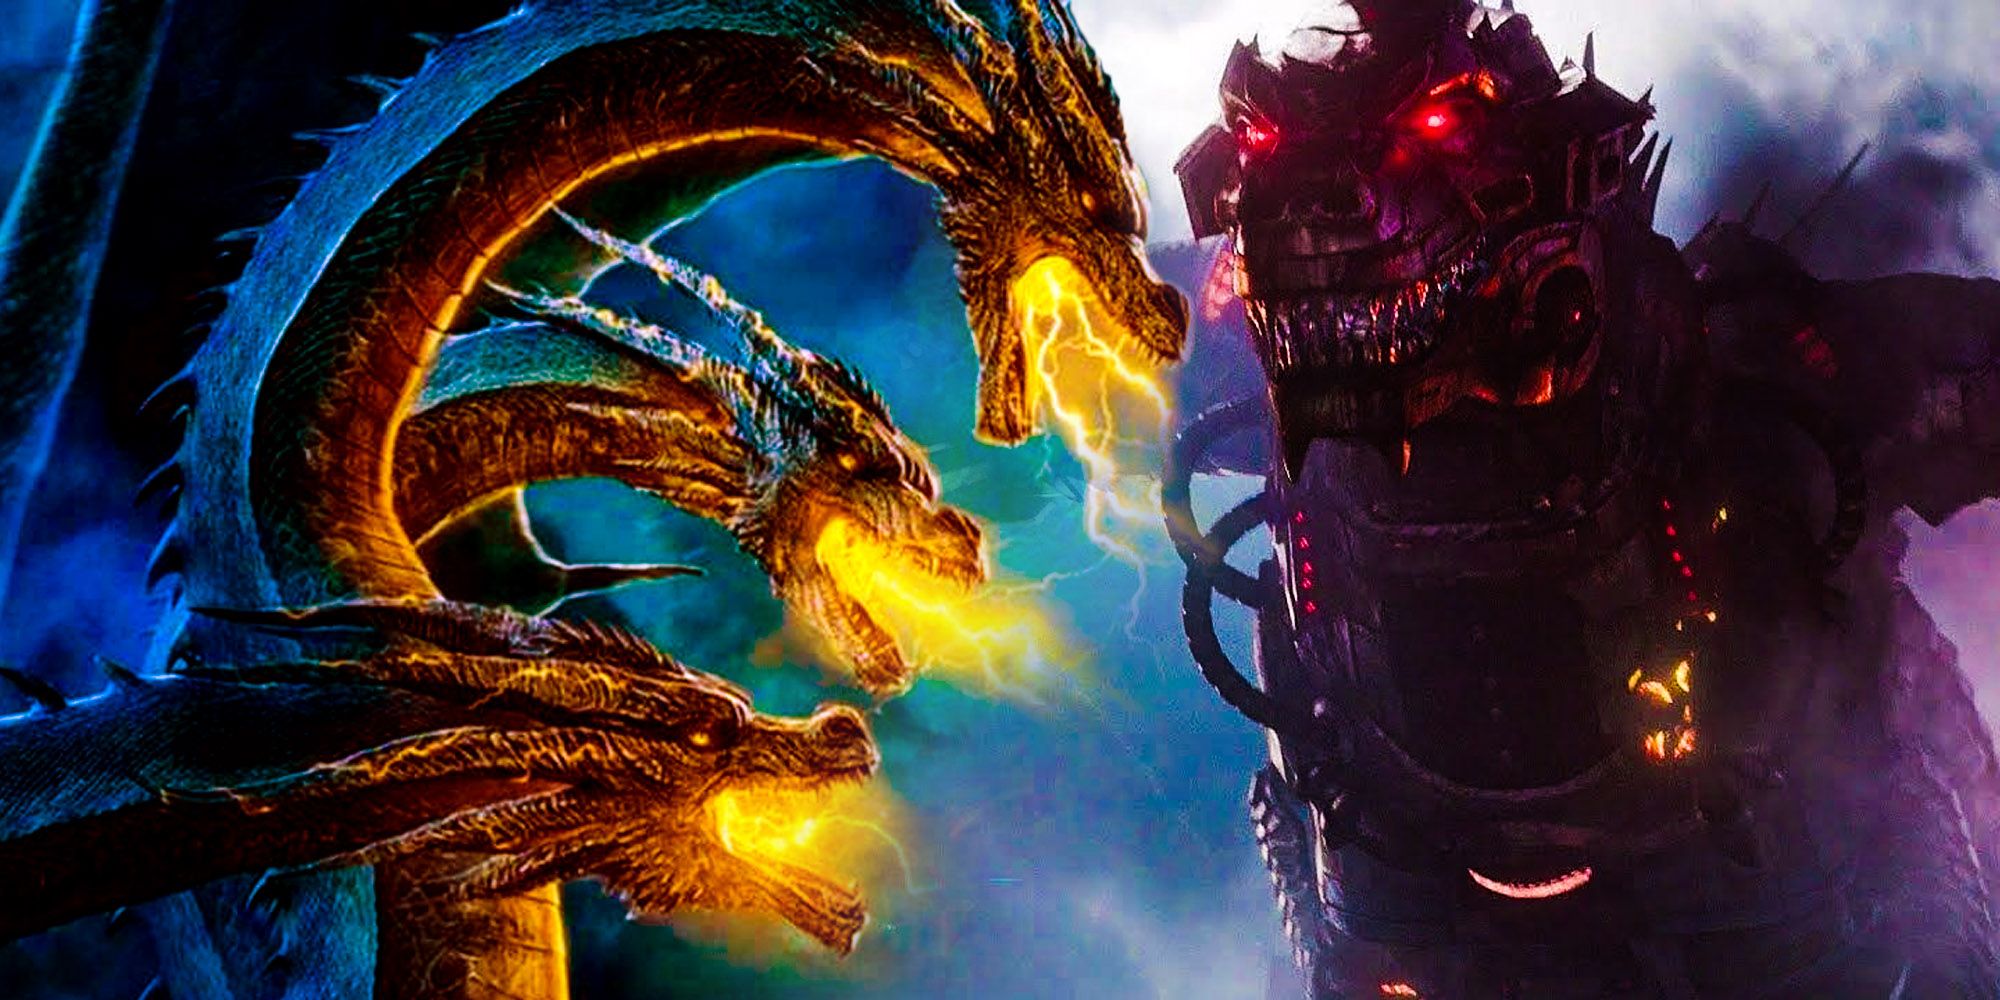 Ghidorah Mechagodzilla Godzilla vs kong